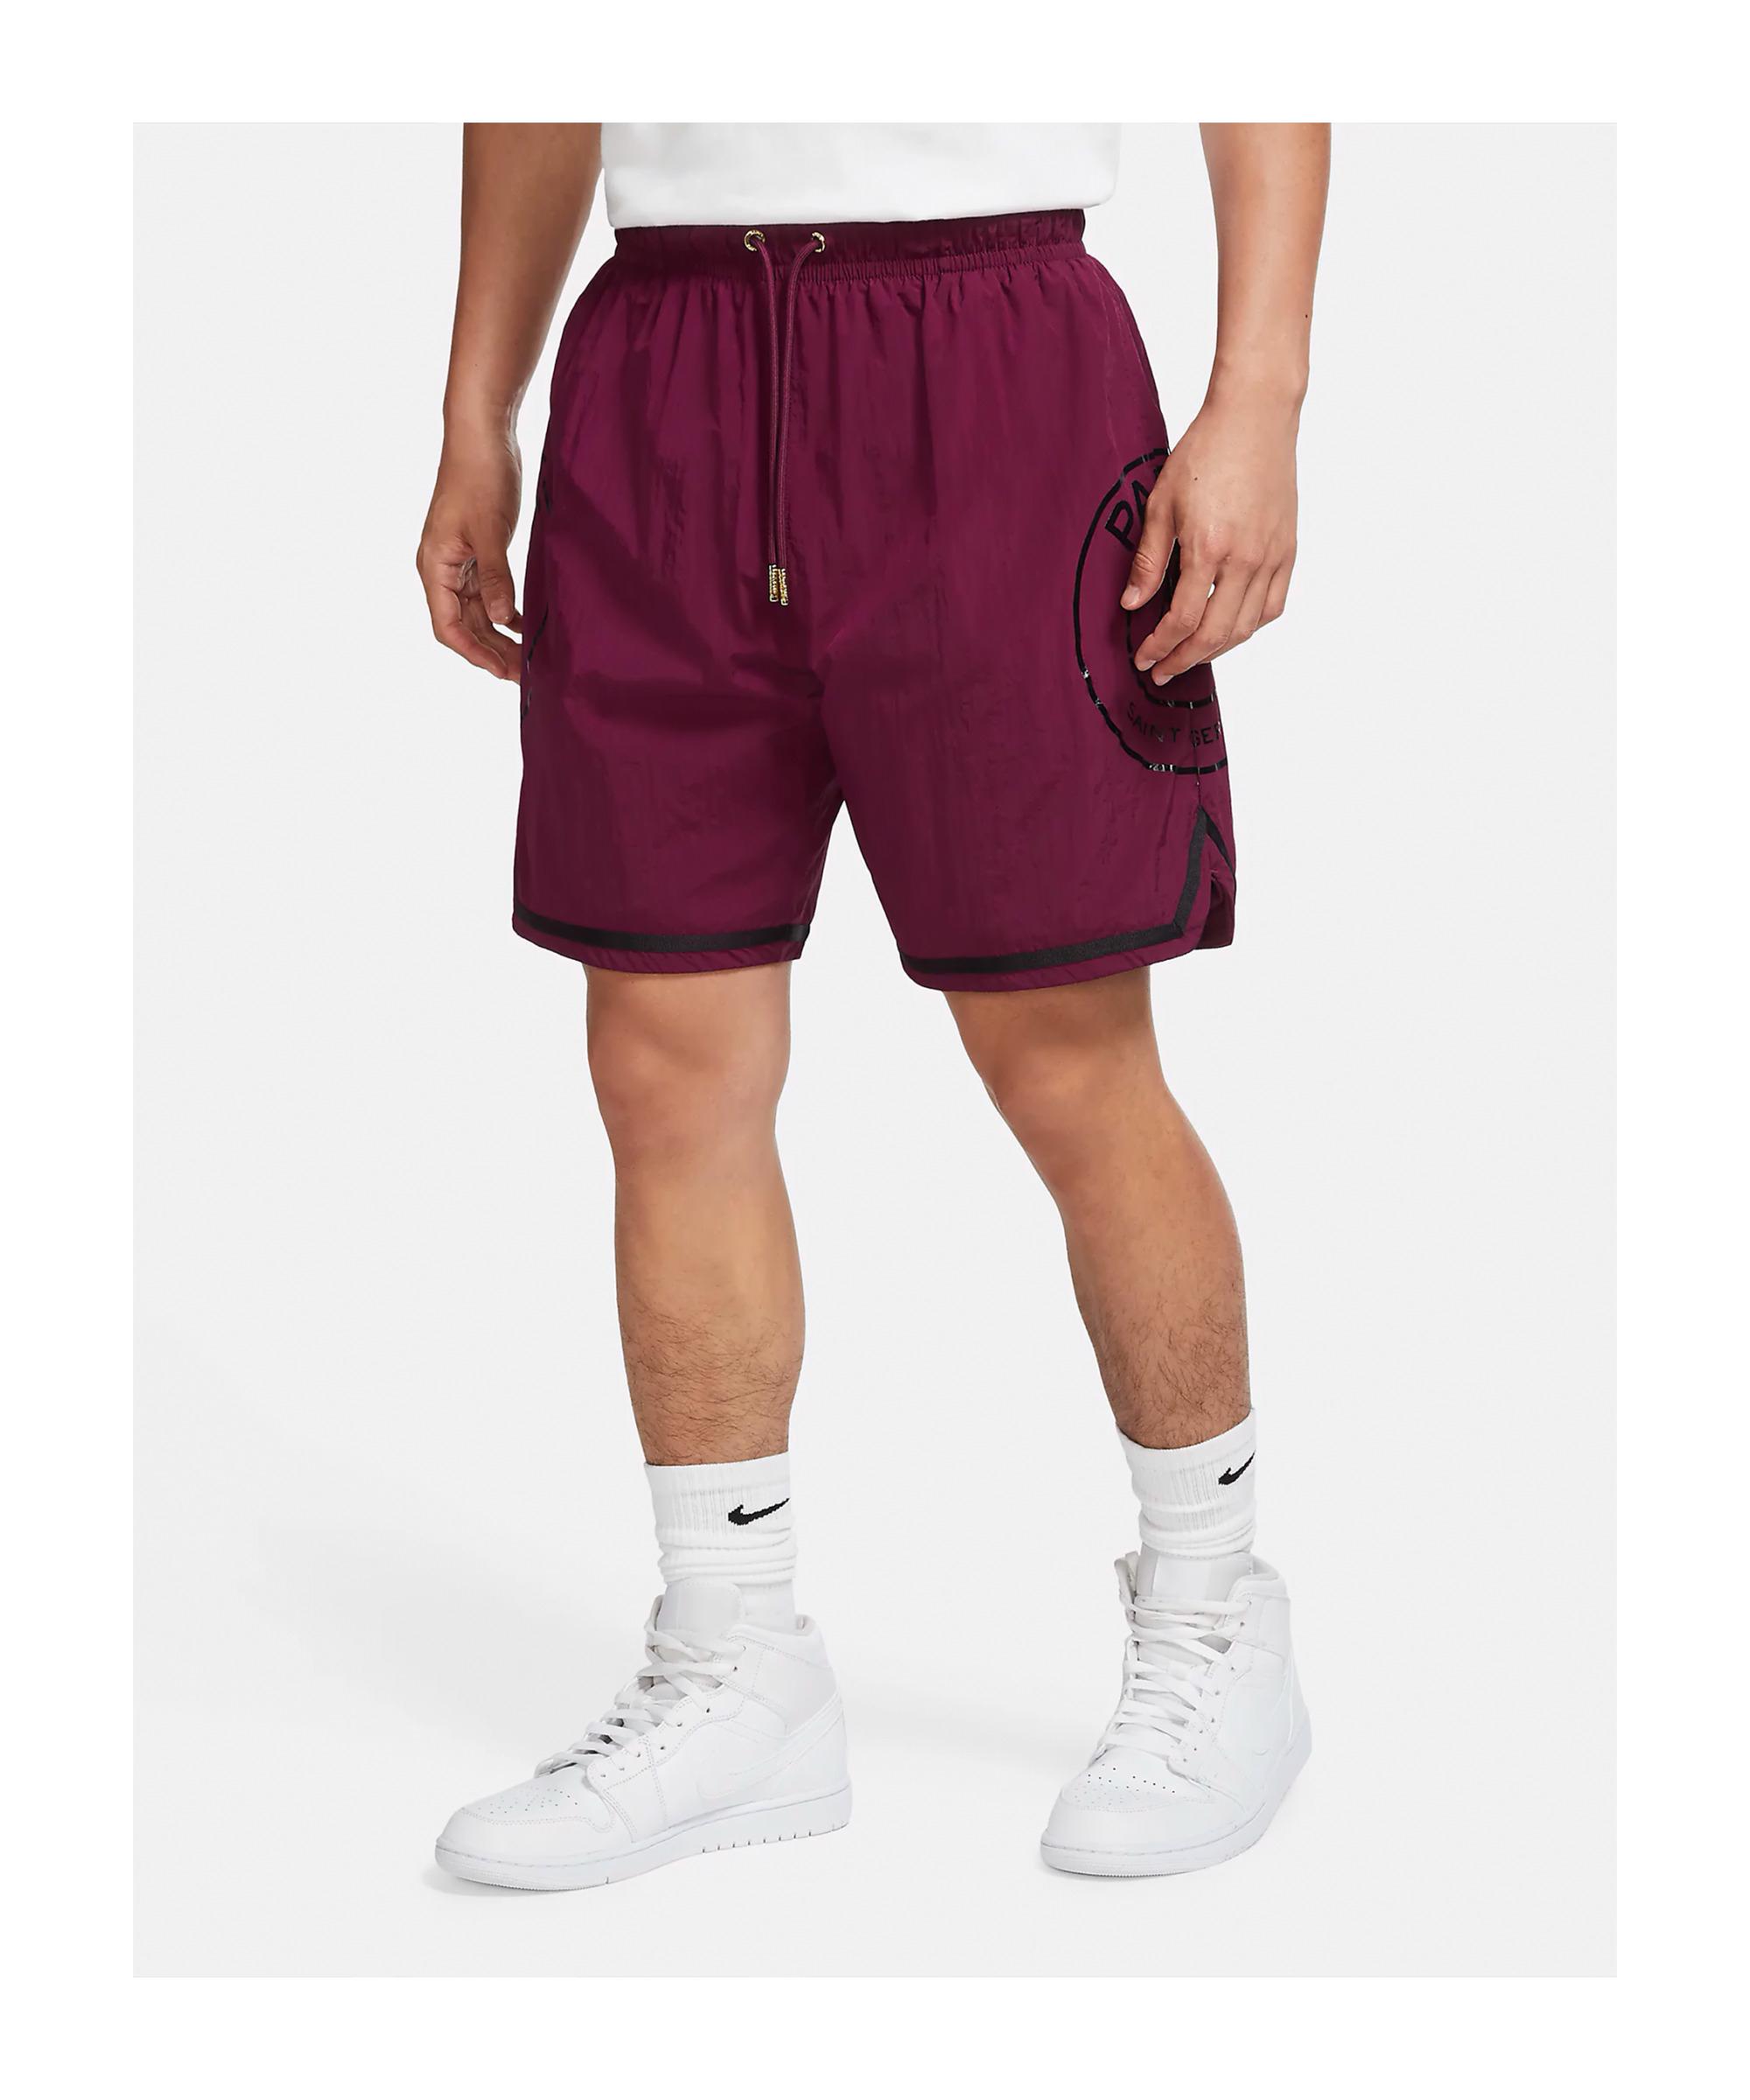 nike shorts online sale